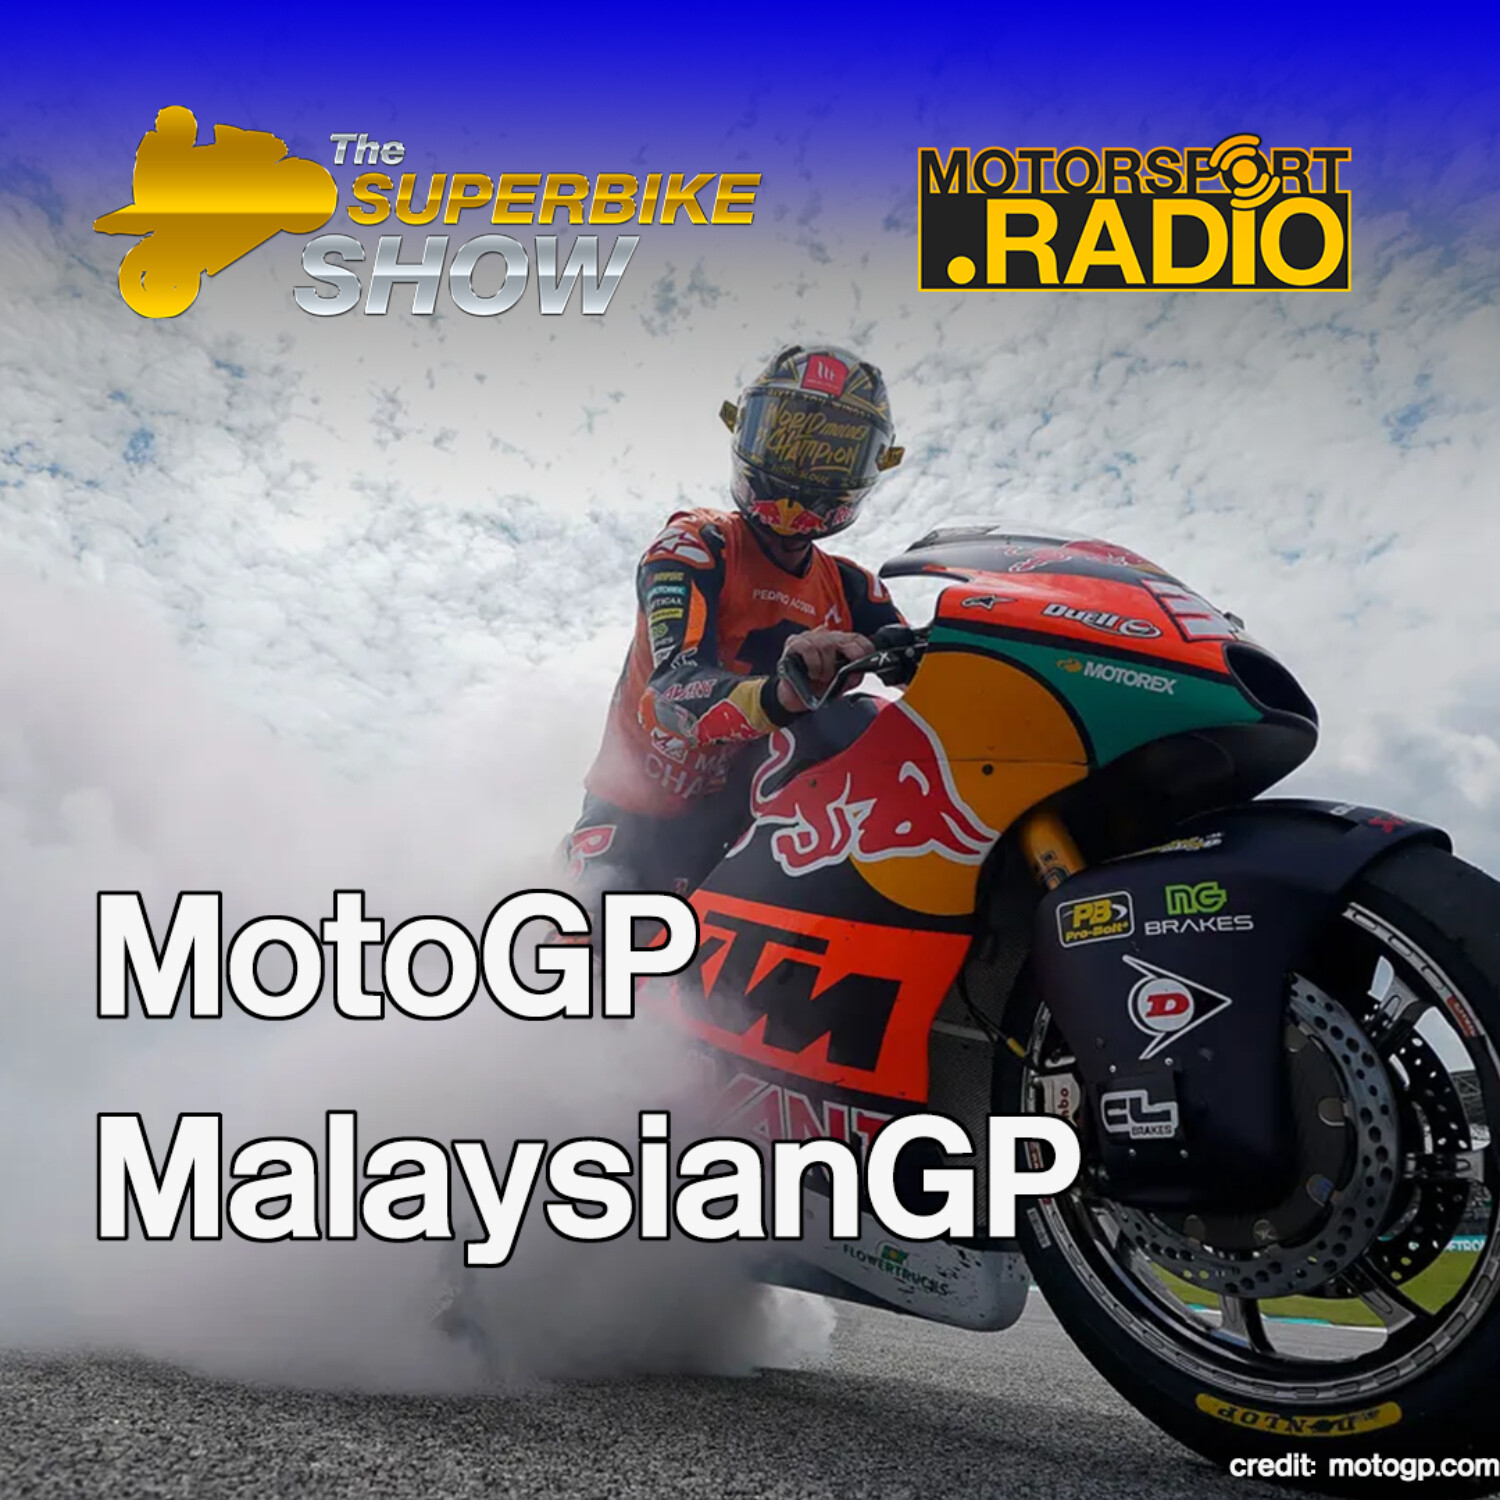 #MalaysianGP Weekend #MotoGP